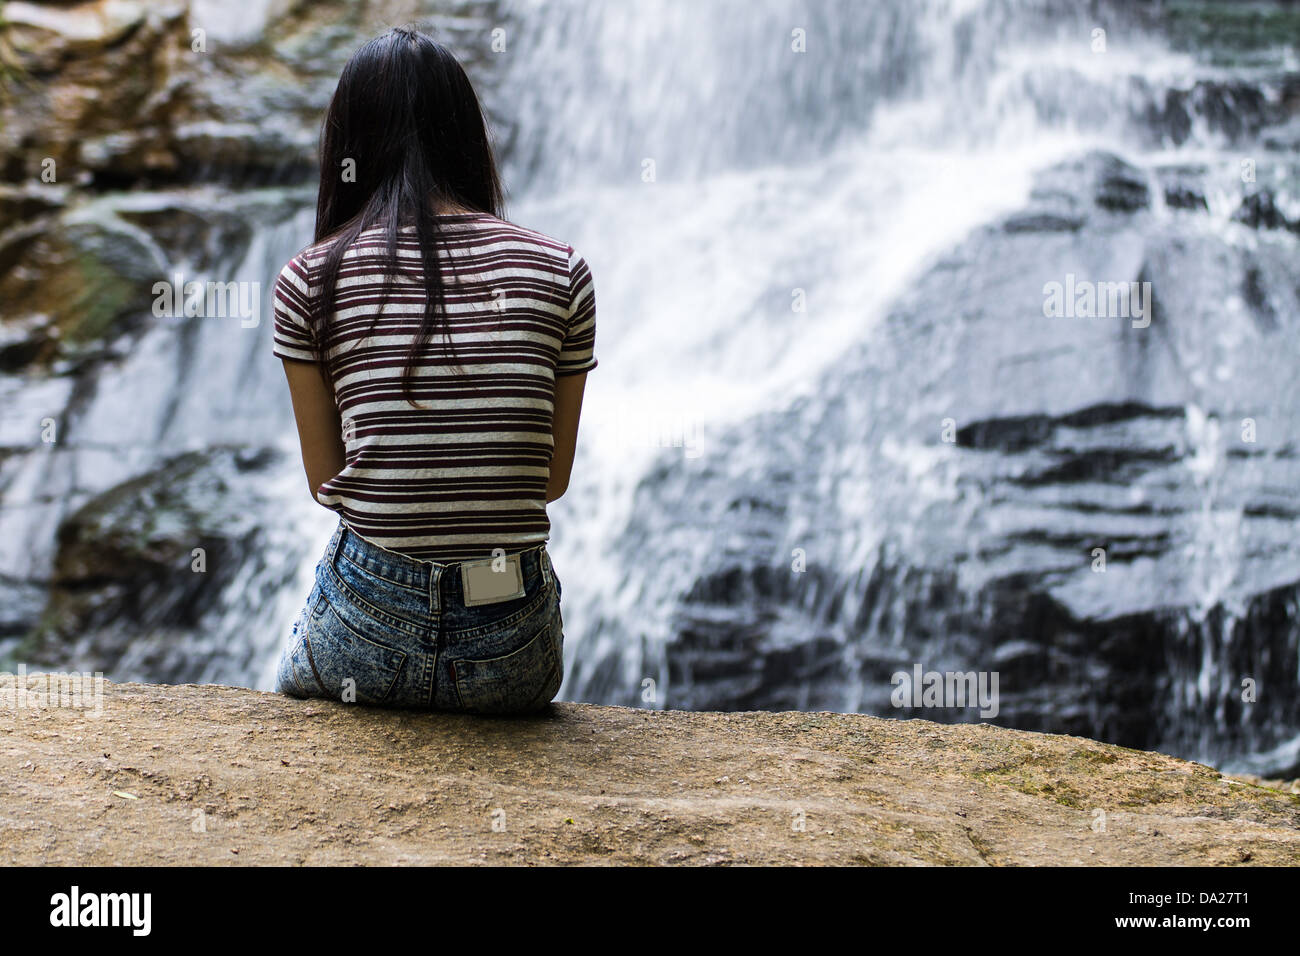 Mädchen schauen Tad Mork Wasserfall in Maerim, Chiangmai Thailand Stockfoto